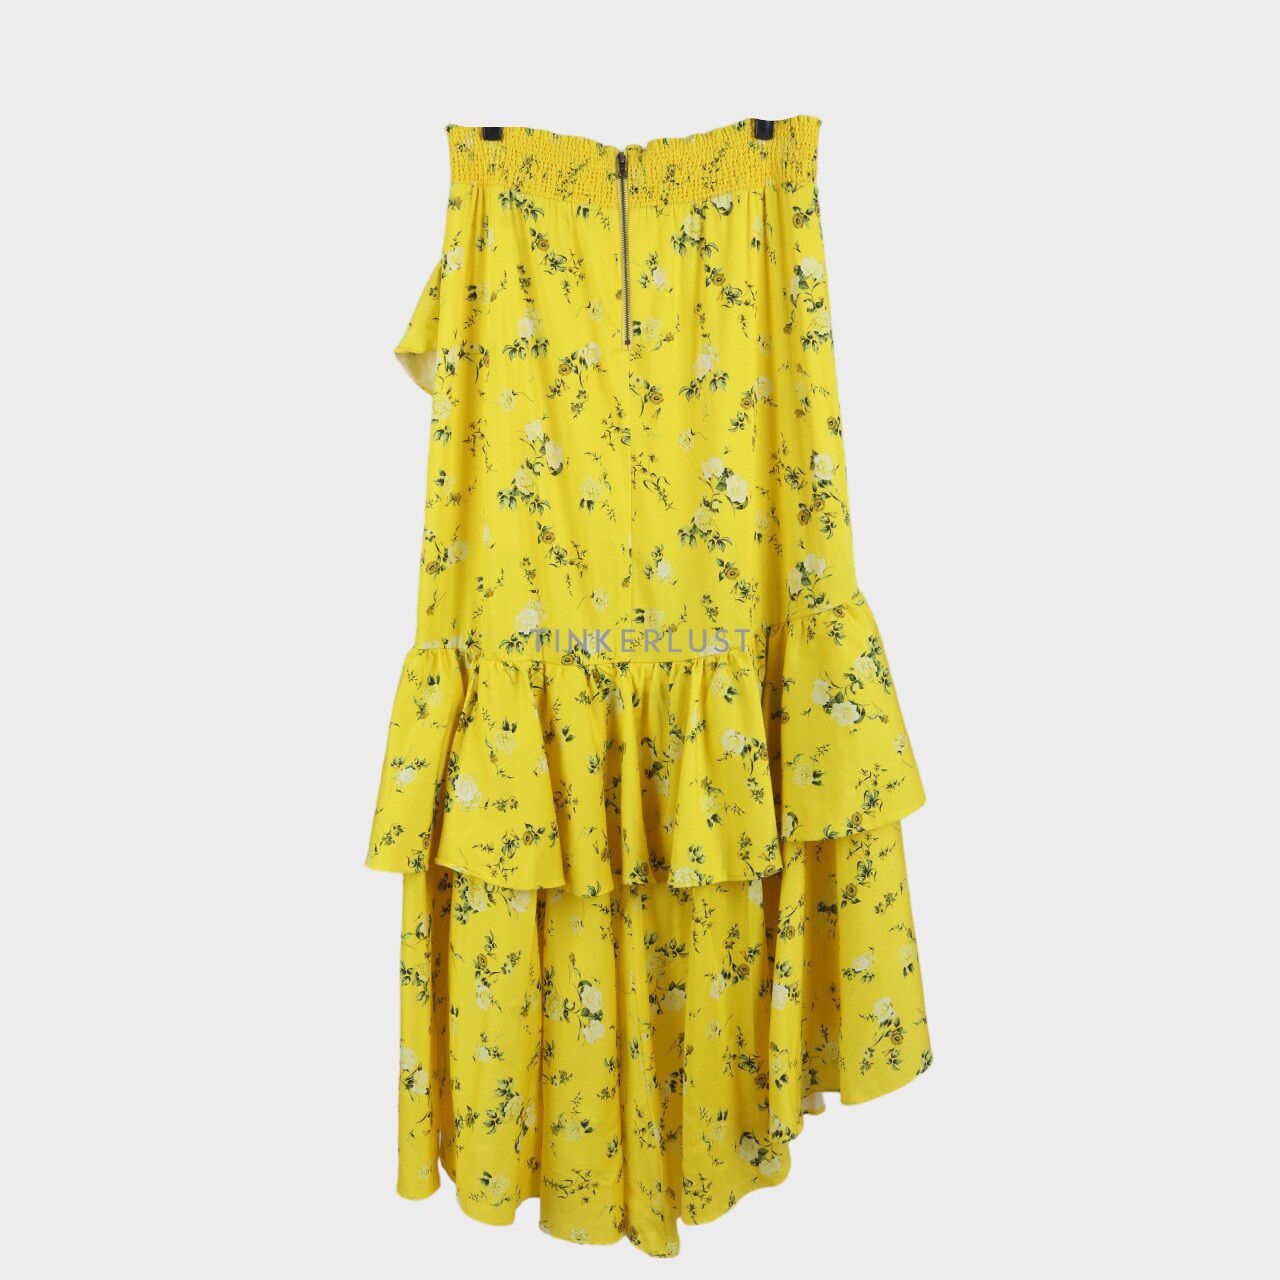 Alice + Olivia Christina Floral Print Yellow Maxi Skirt